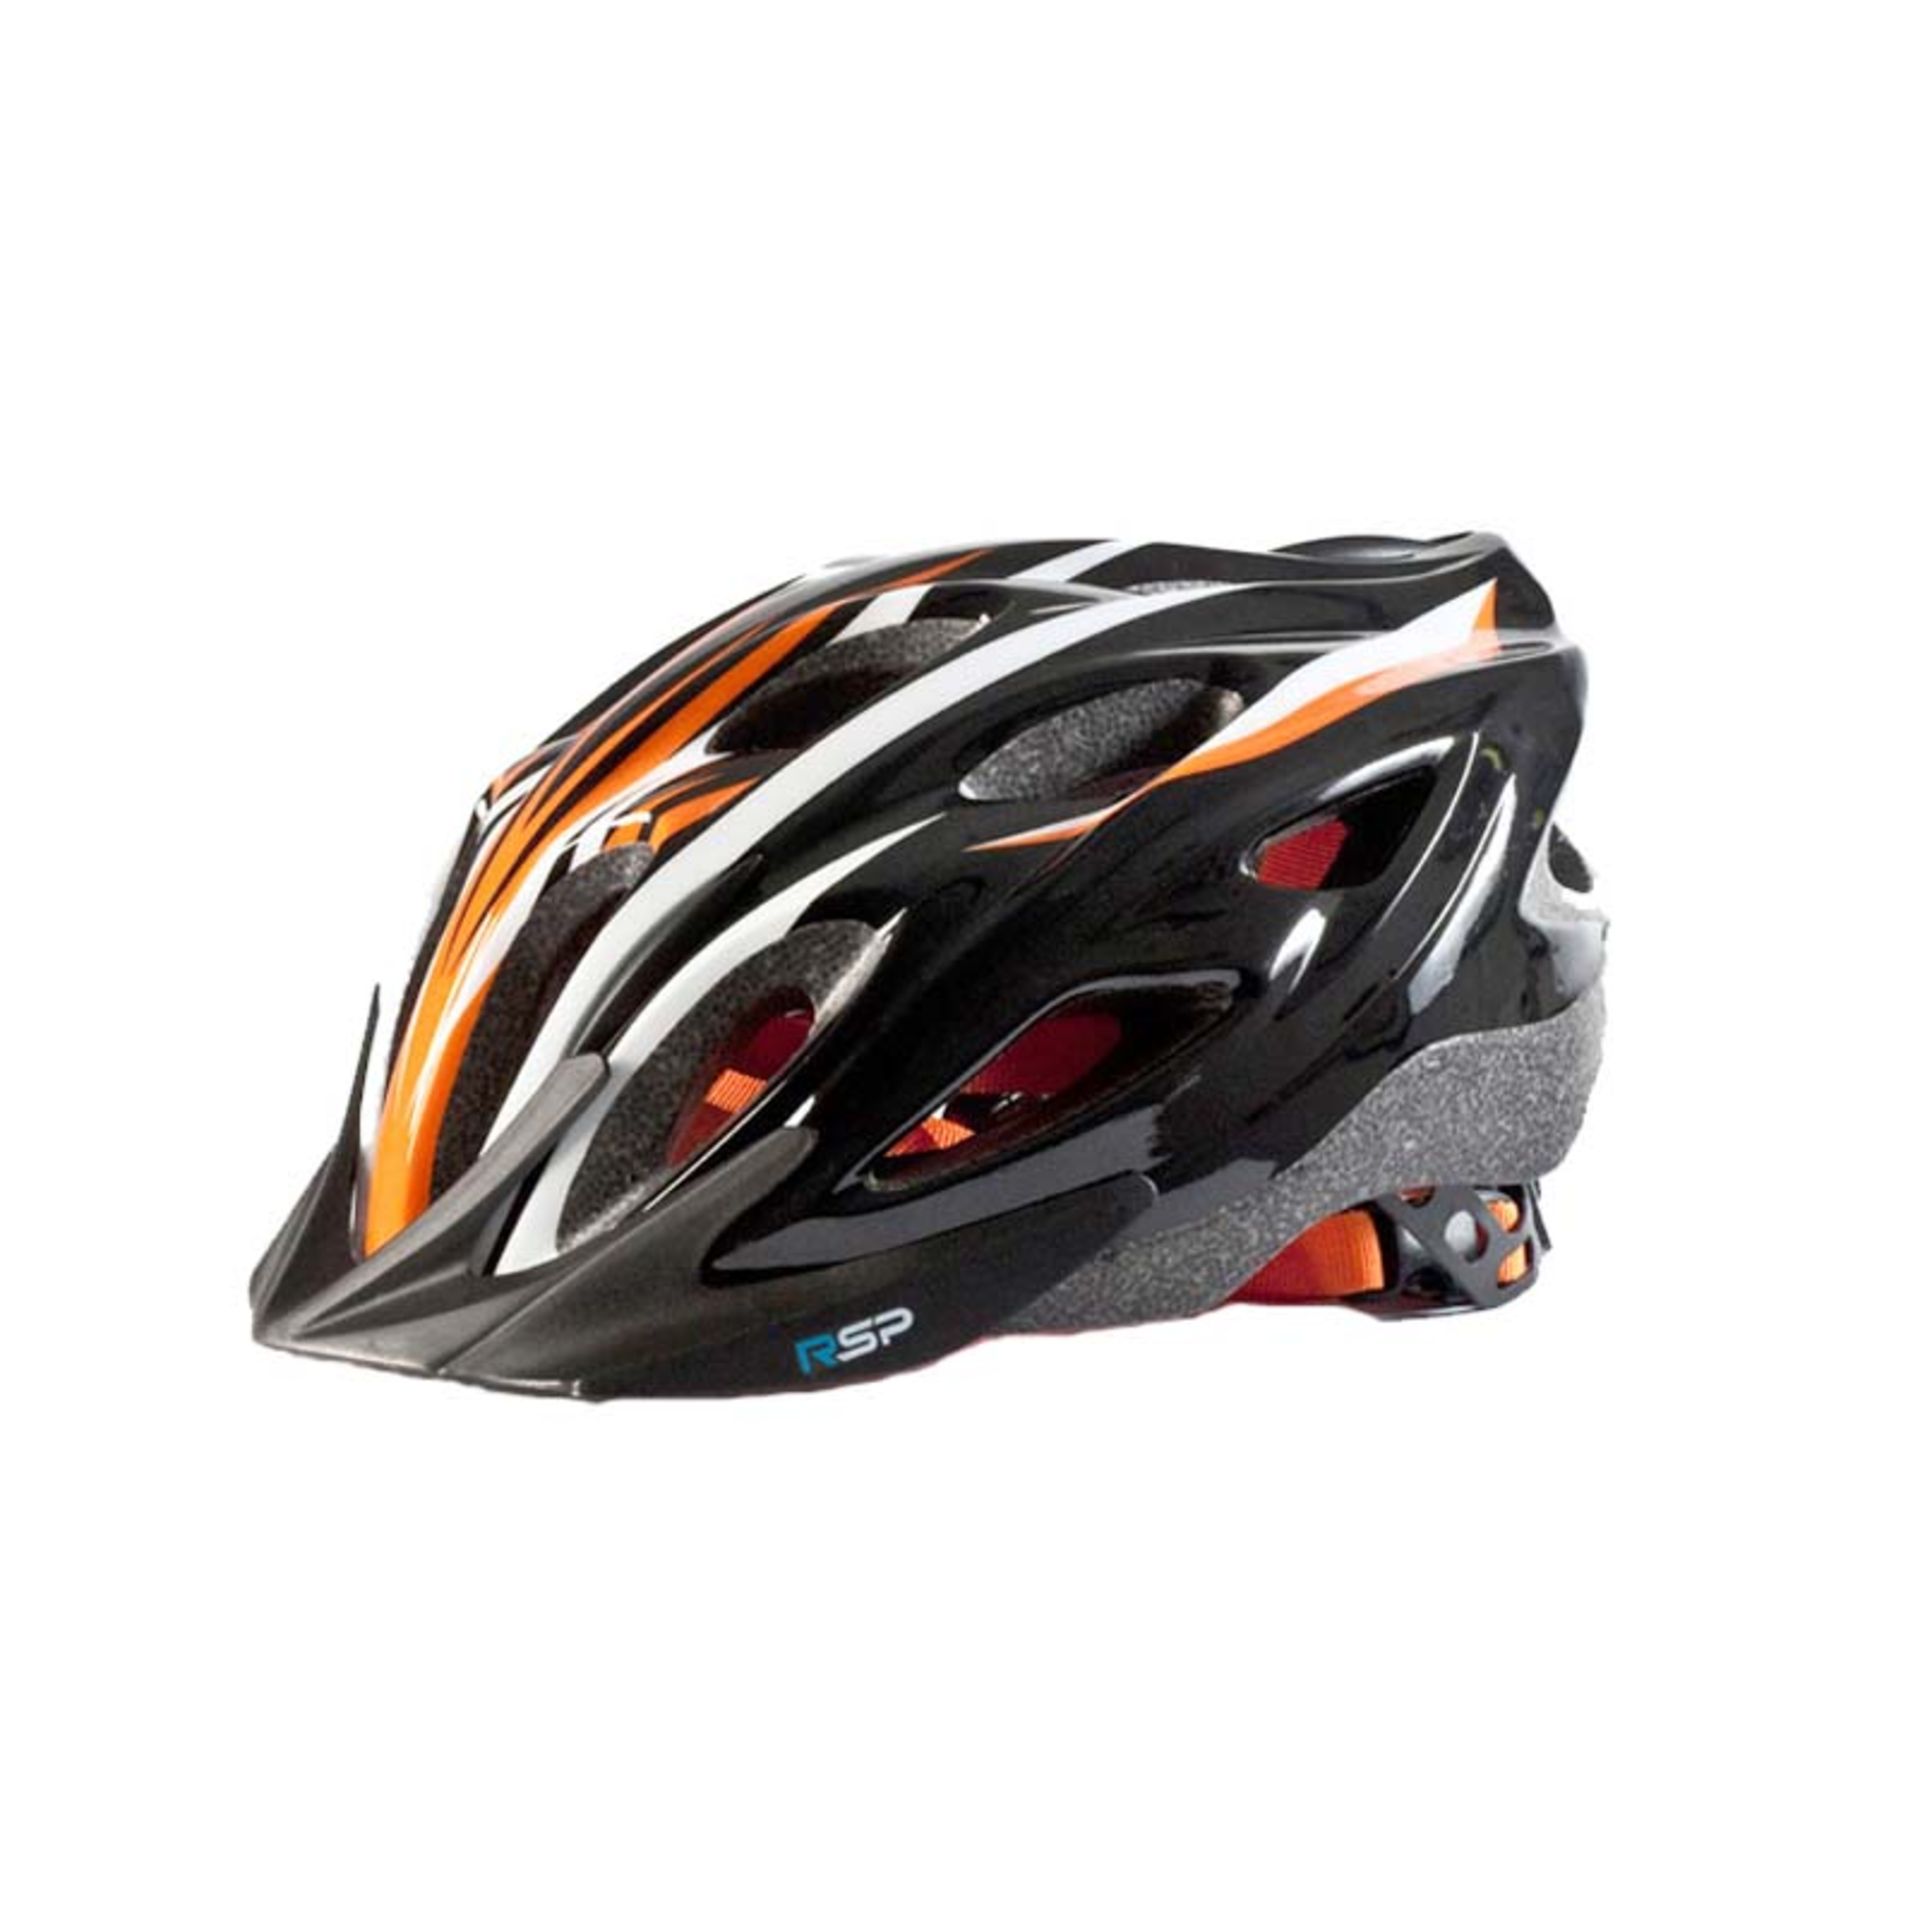 V RSP Cycling Helmet 54-58cm Orange RRP £44.99